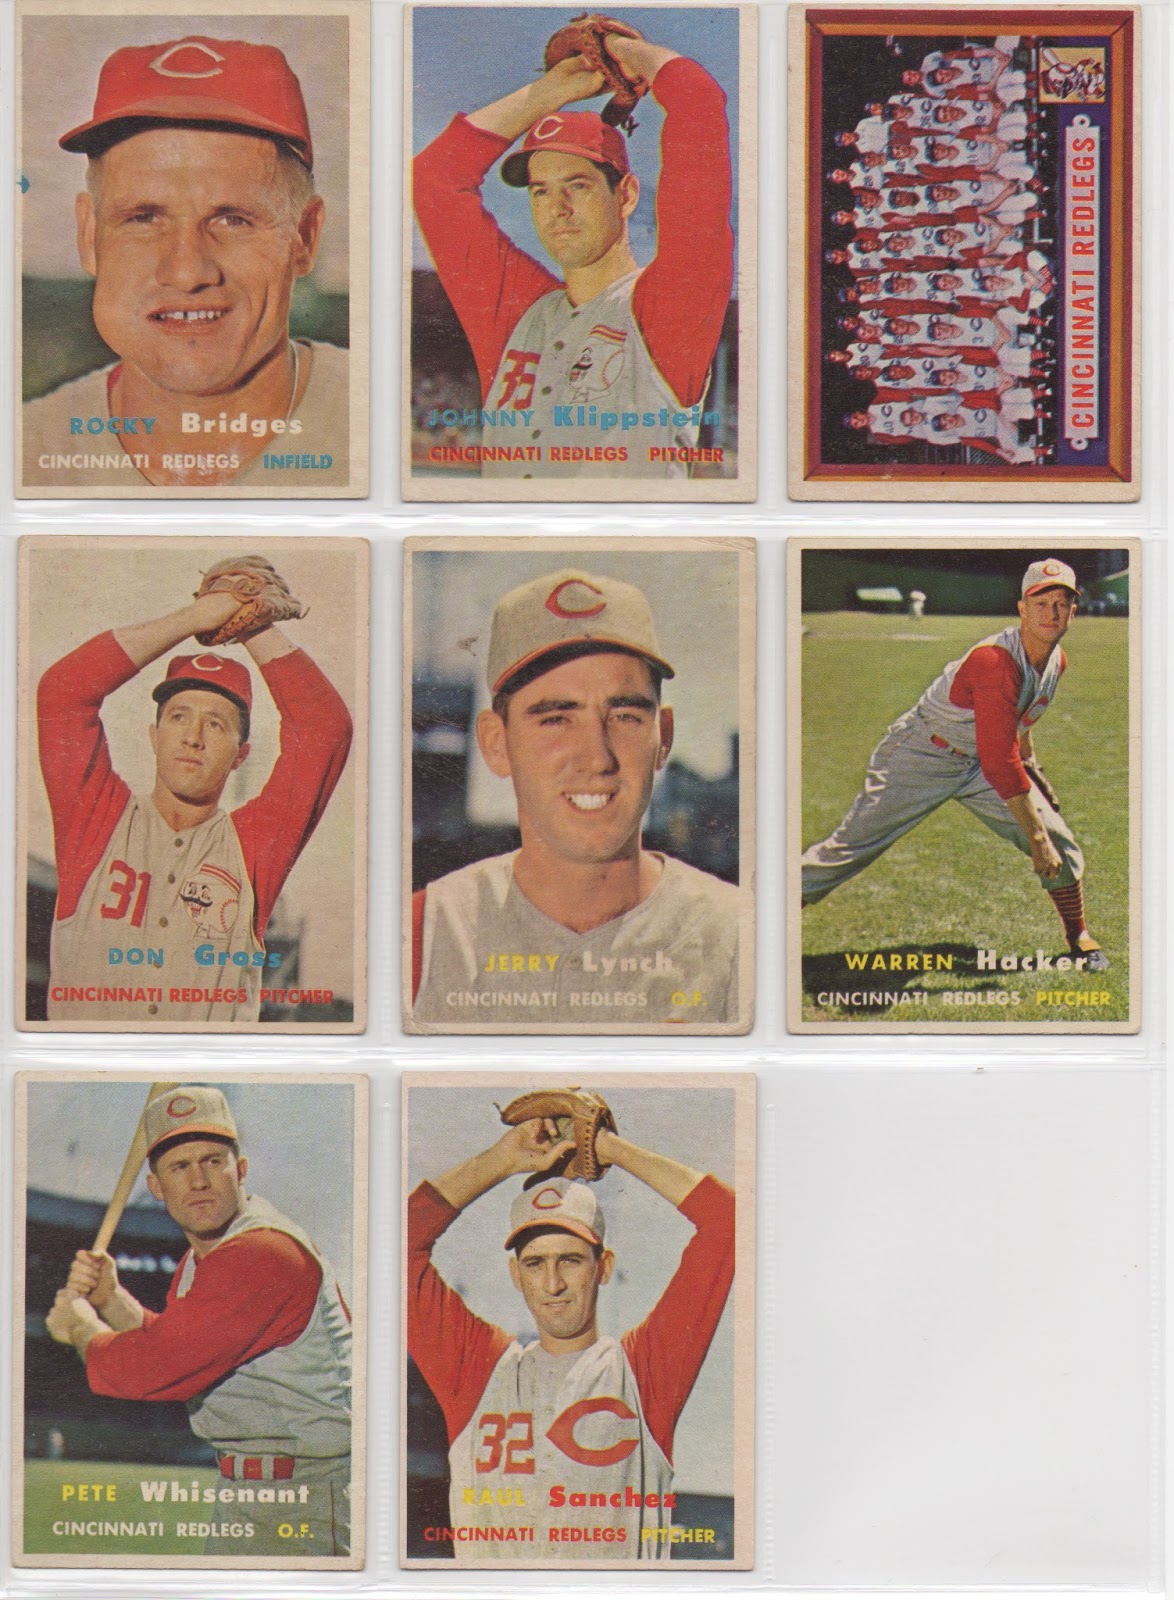 Cincinnati Reds Baseball Card Collector: 1957 Topps Cincinnati Reds Team Set1174 x 1600